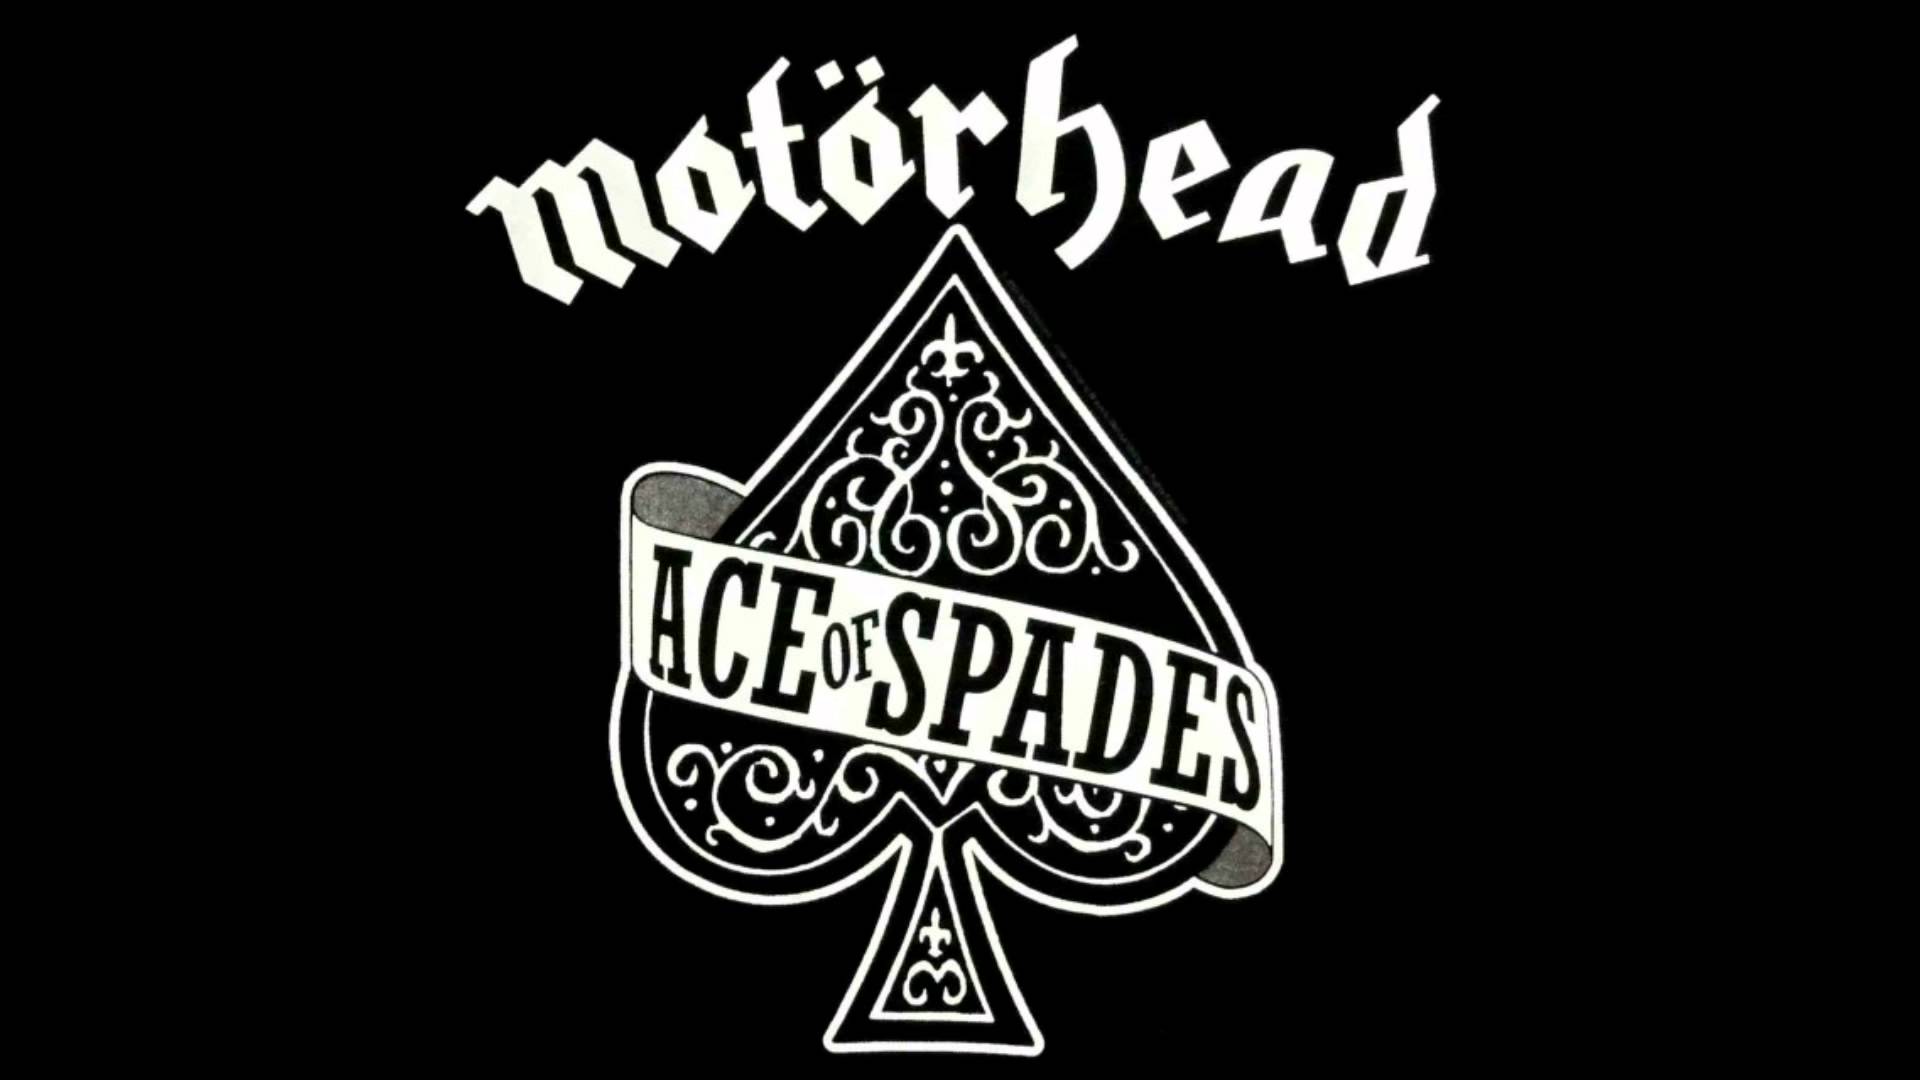 Motorhead Ace of Spades